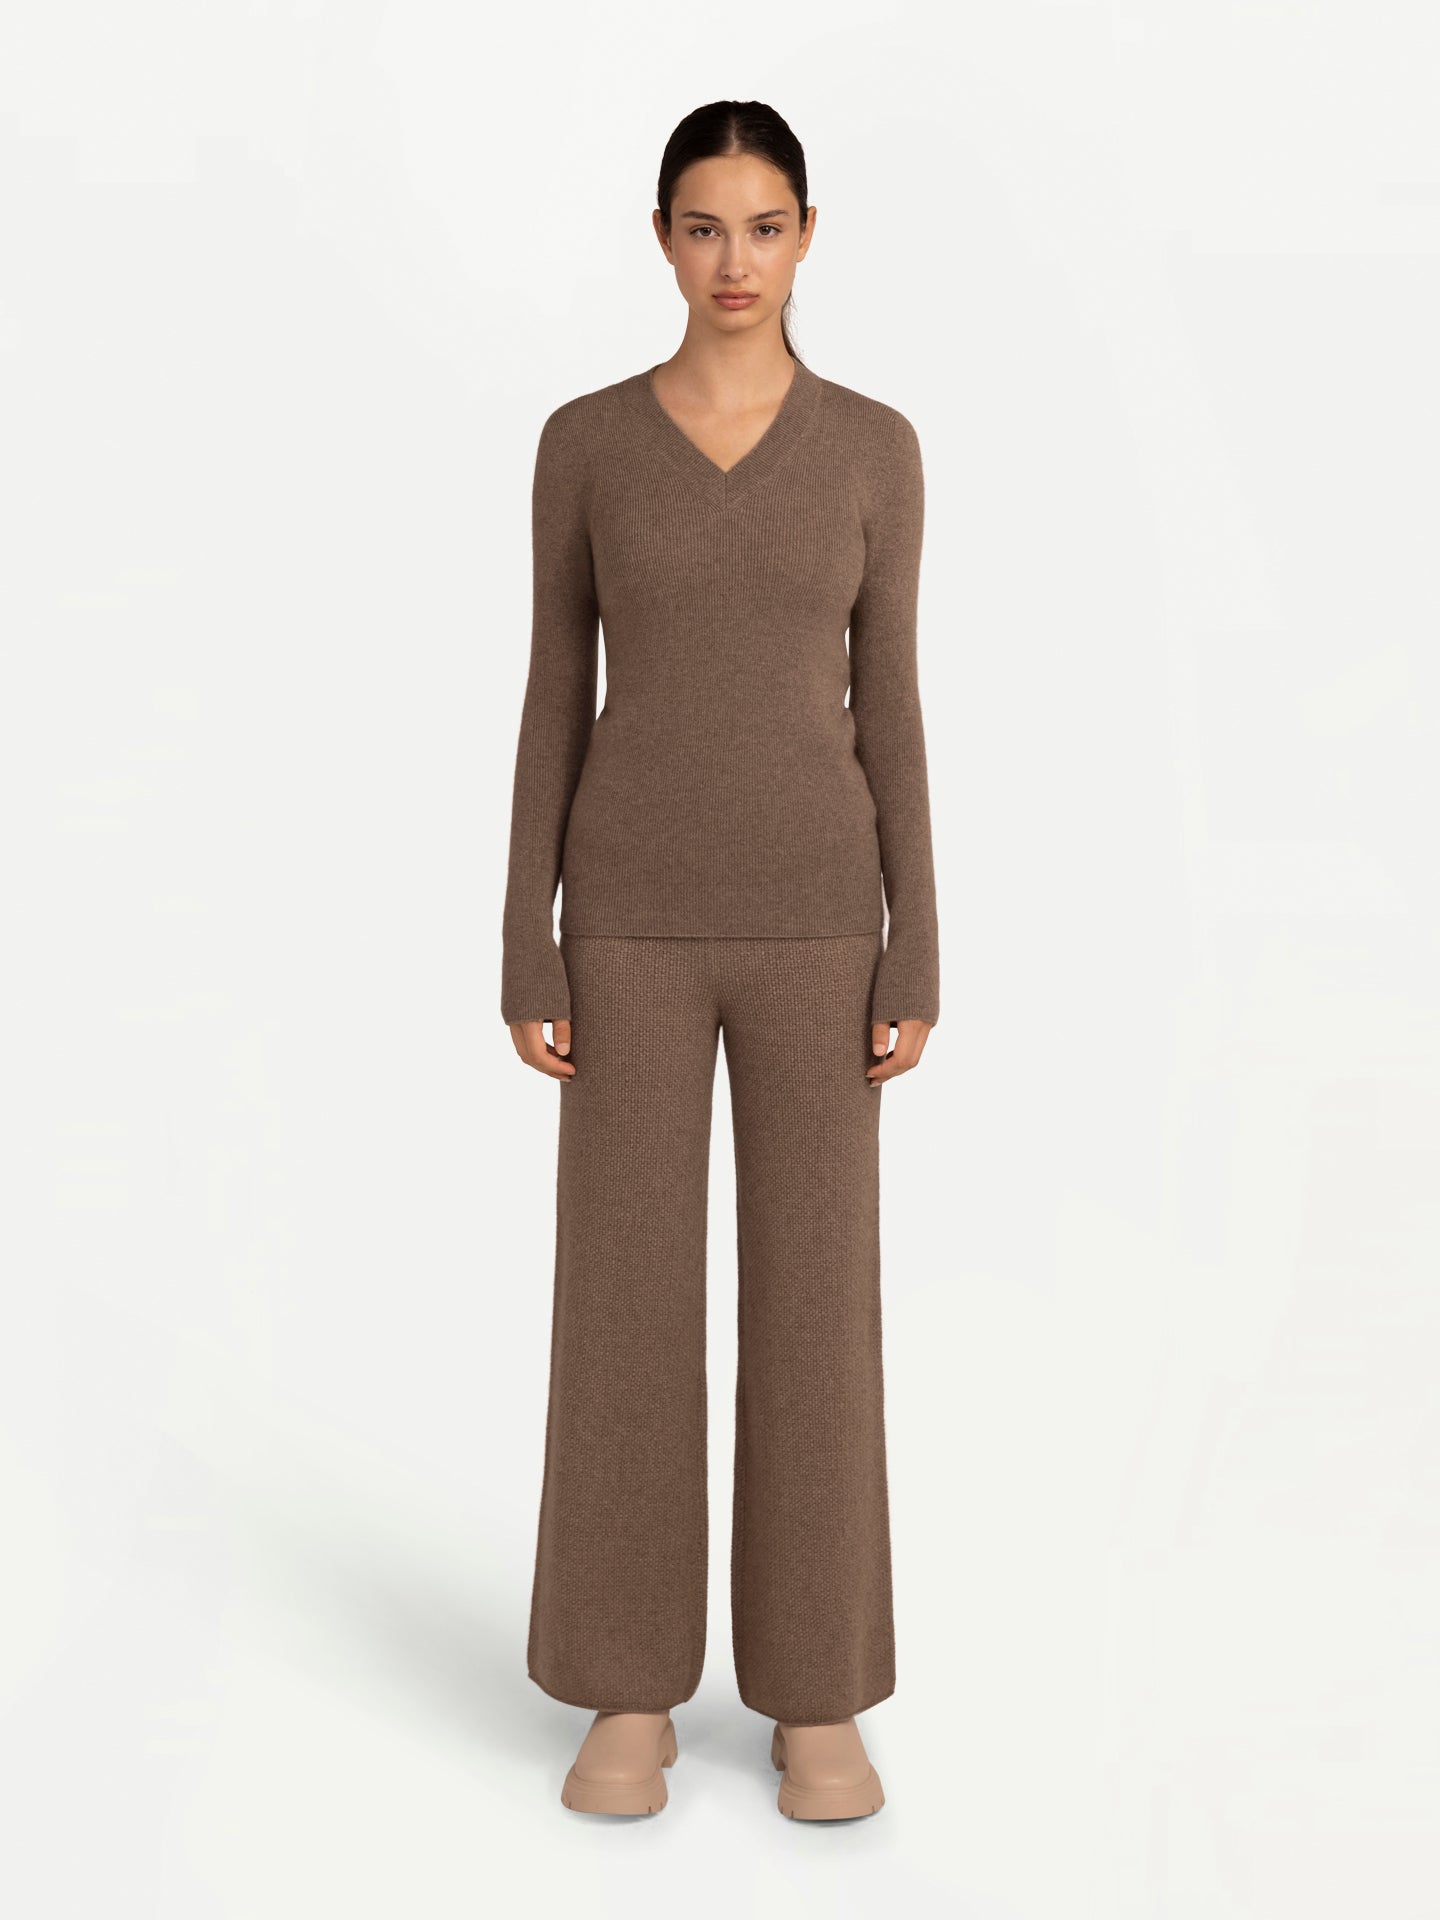 Women's Organic Cashmere Lightweight V-Neck Sweater Taupe - Gobi Cashmere